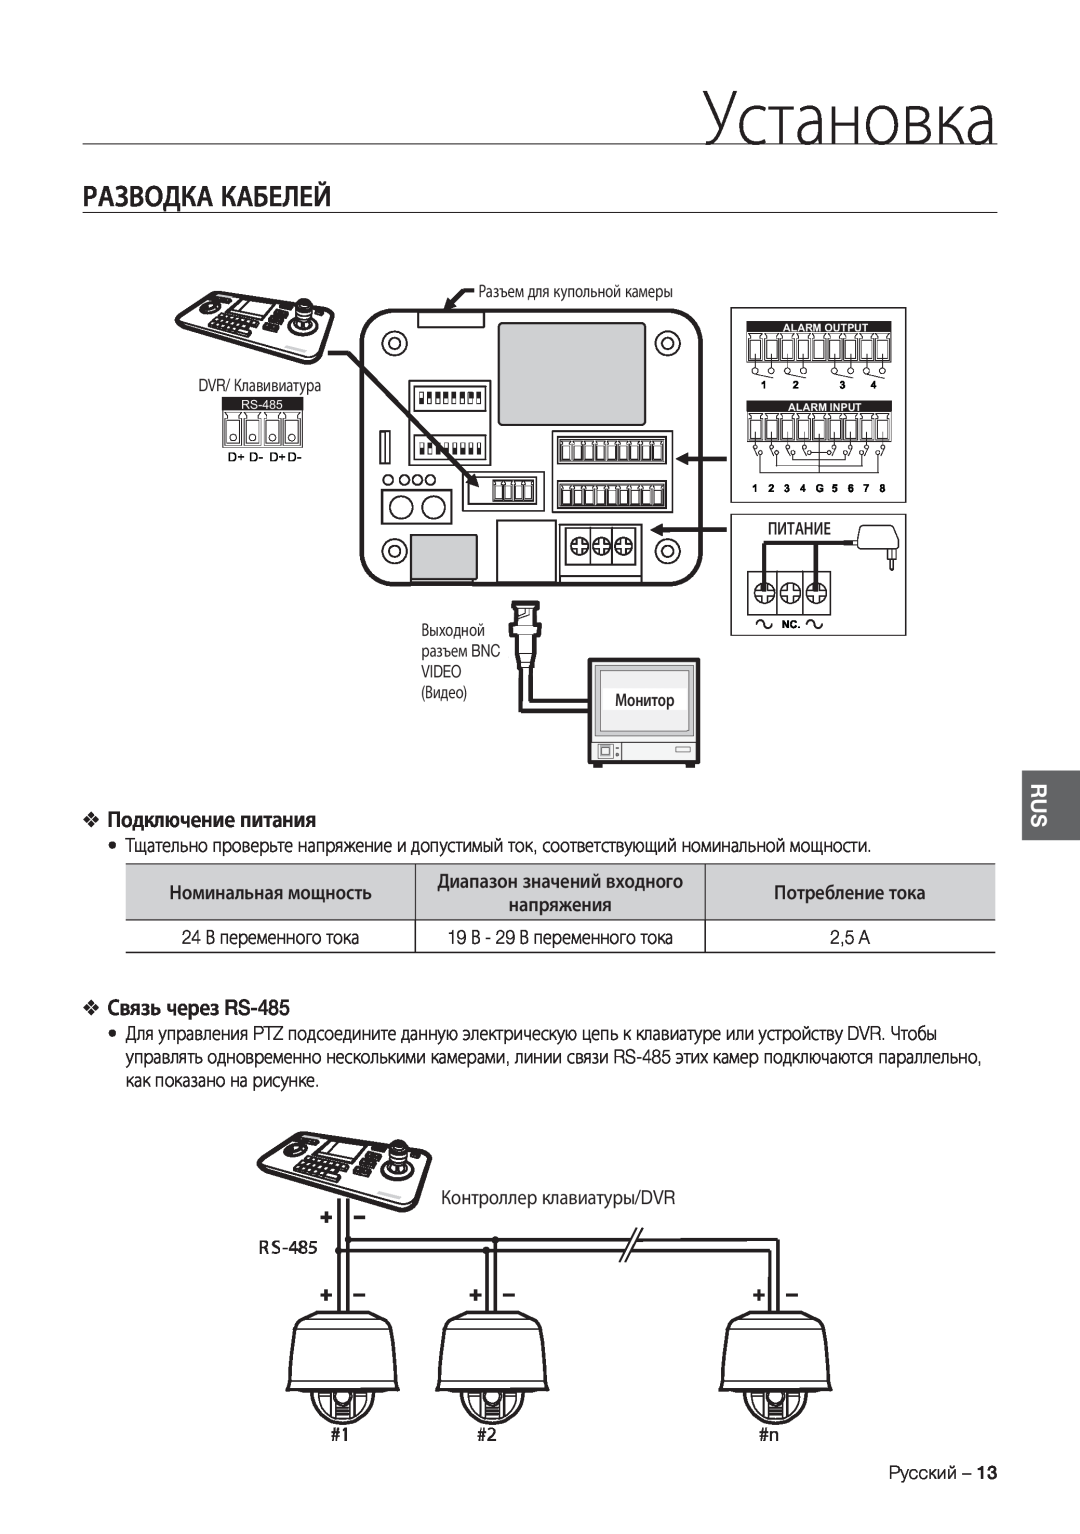 Samsung SCC-C7478P manual Разводка Кабелей, Подключение питания, Связь через RS-485, Установка 